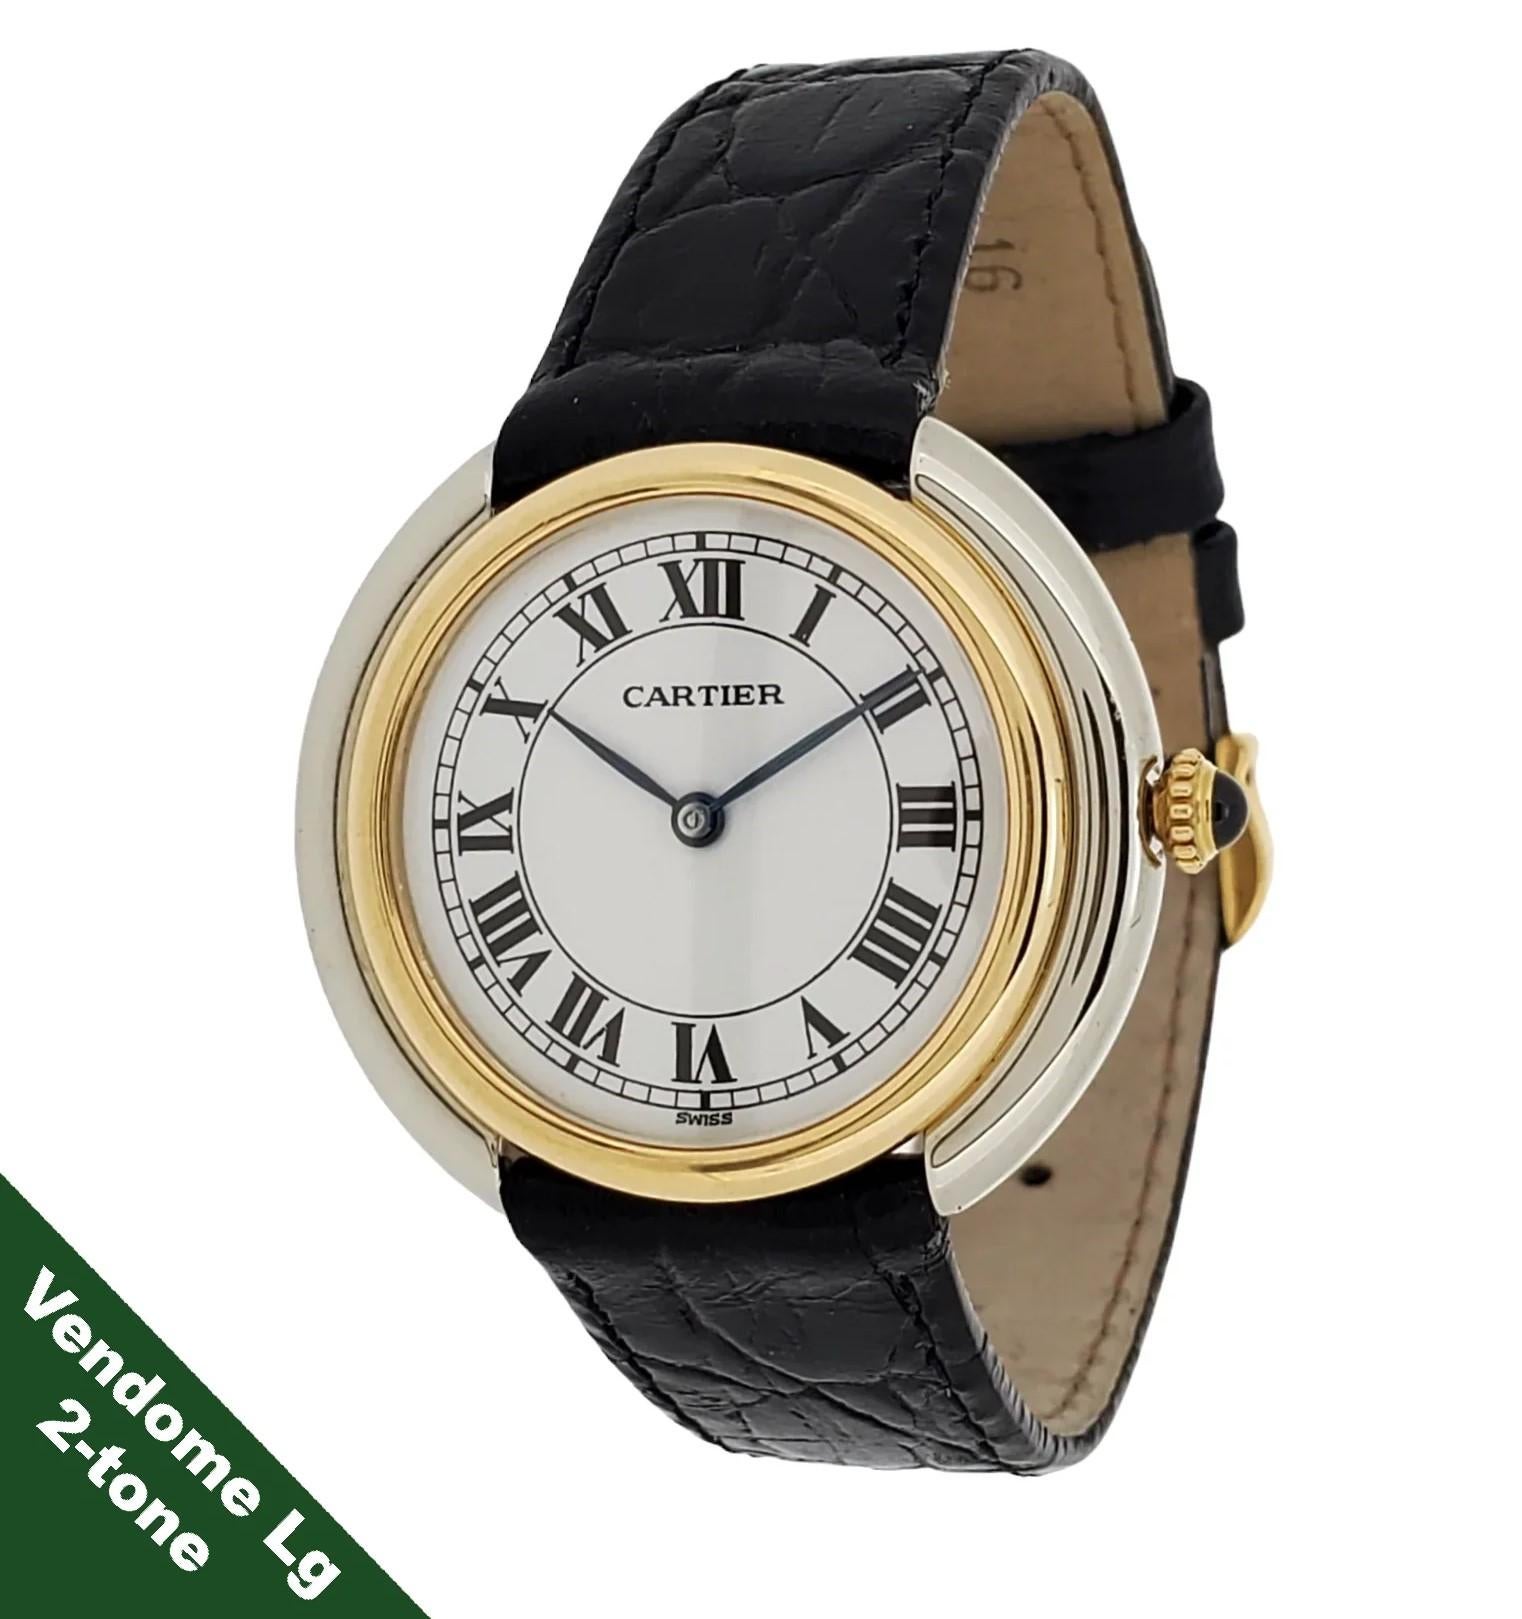 Cartier Paris Vendome 2-Tone Large Watch 34mm, Manual wind, Circa. 1973-1976 For Sale 4